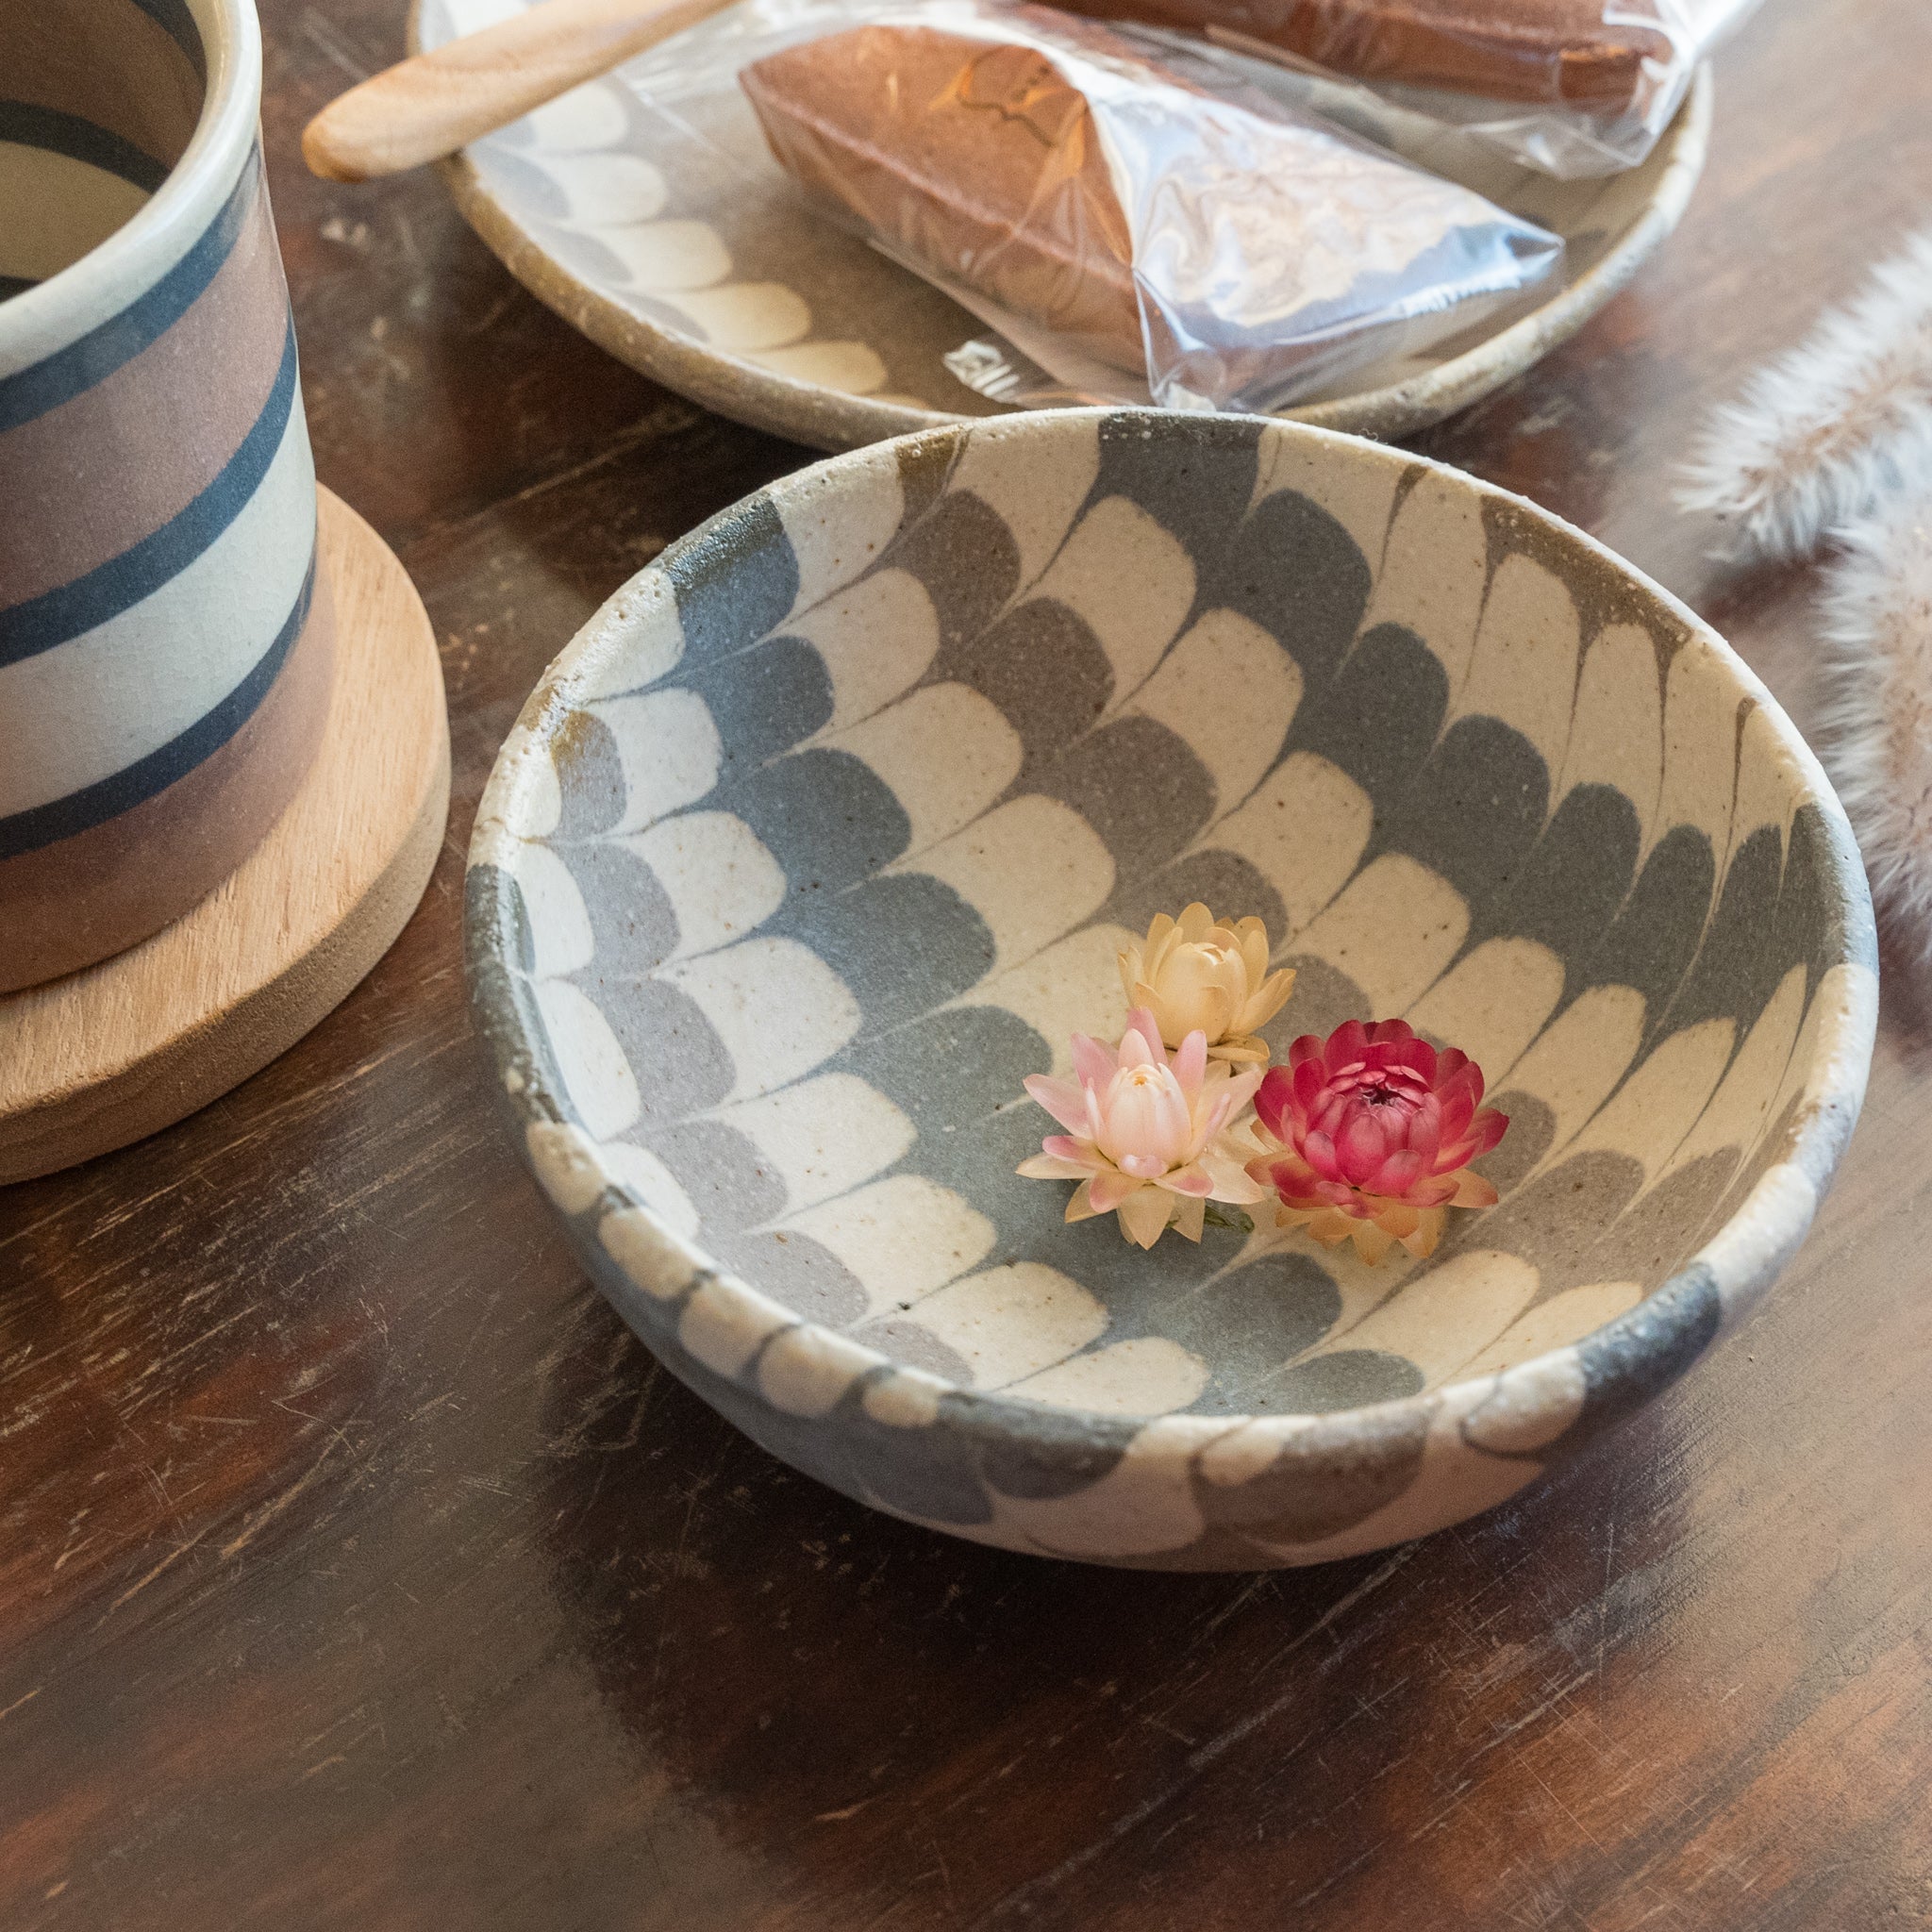 Hanako Sakashita's kneaded round bowl perfect for break time